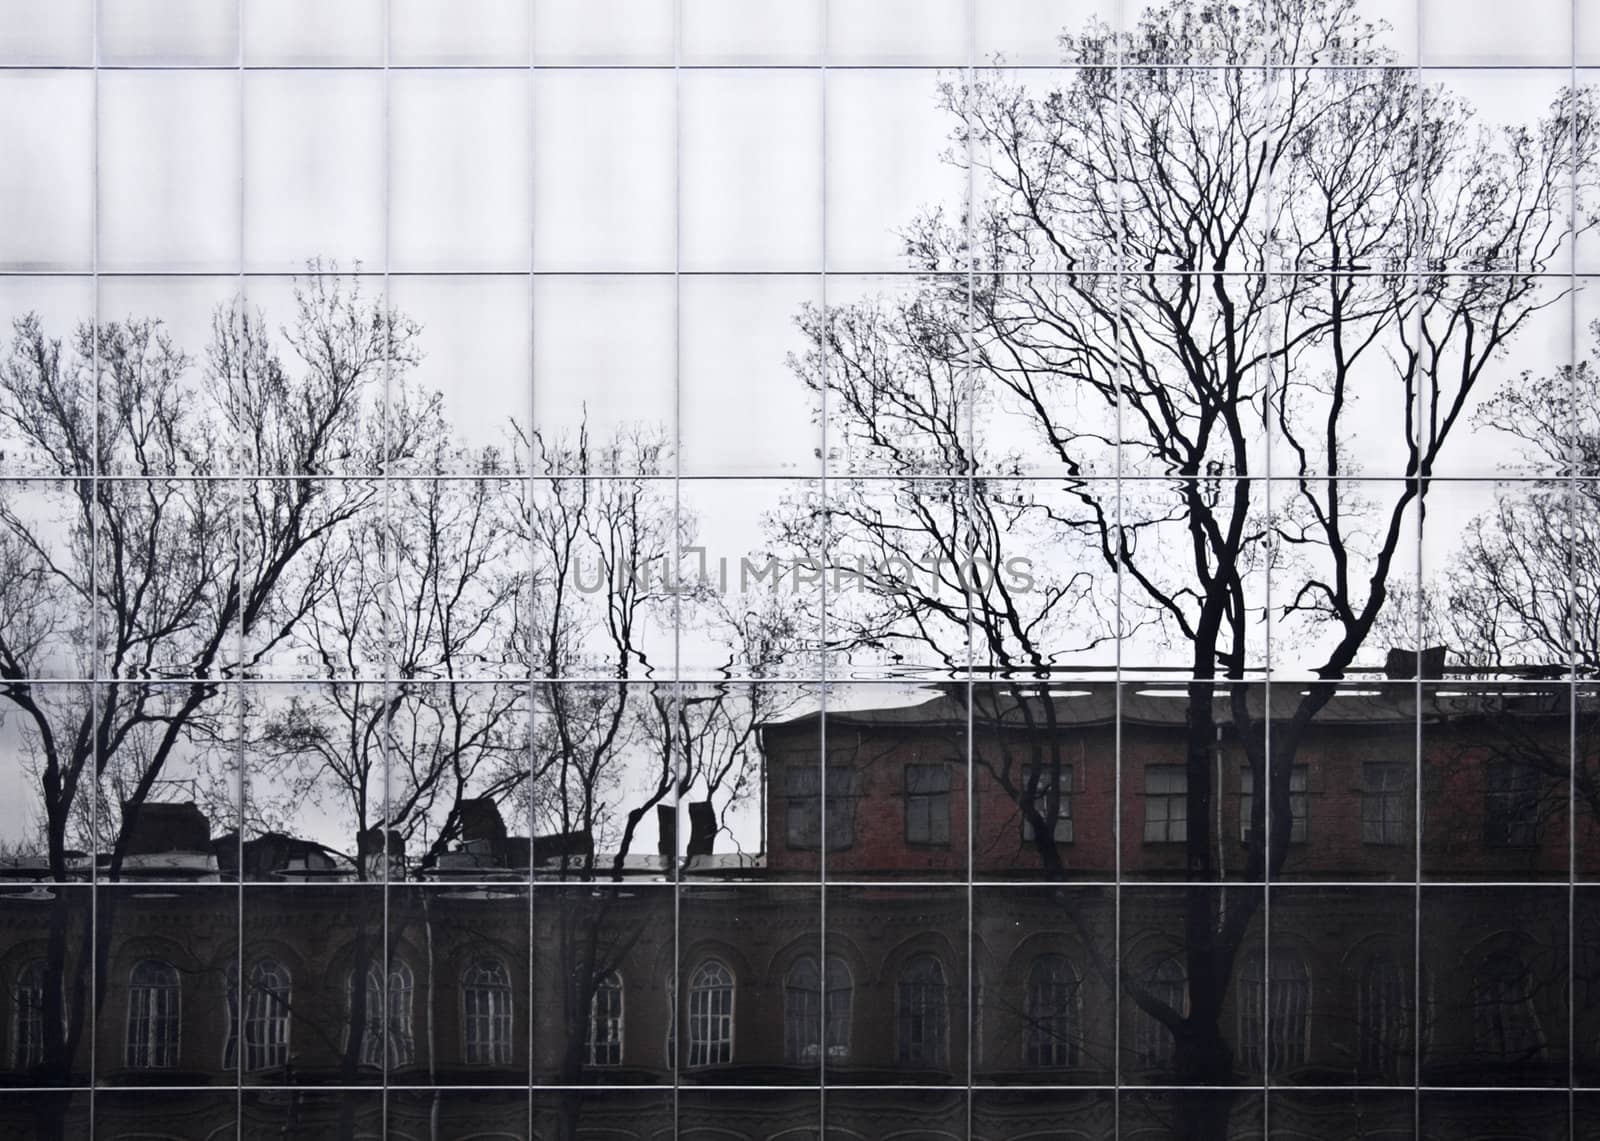 City reflection in modern building glass facade